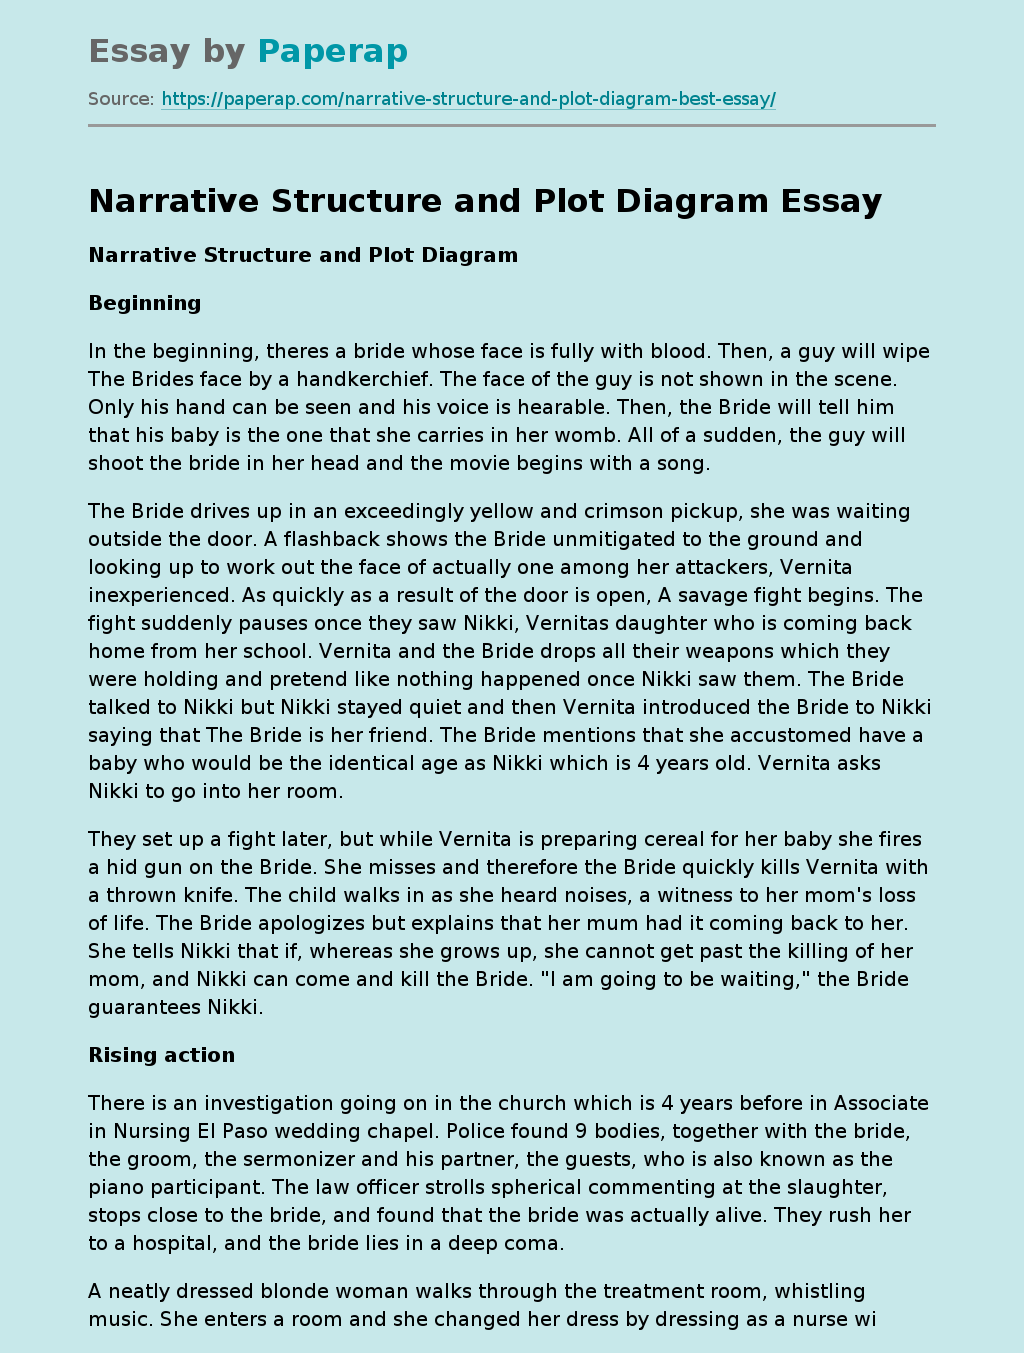 Narrative Structure and Plot Diagram